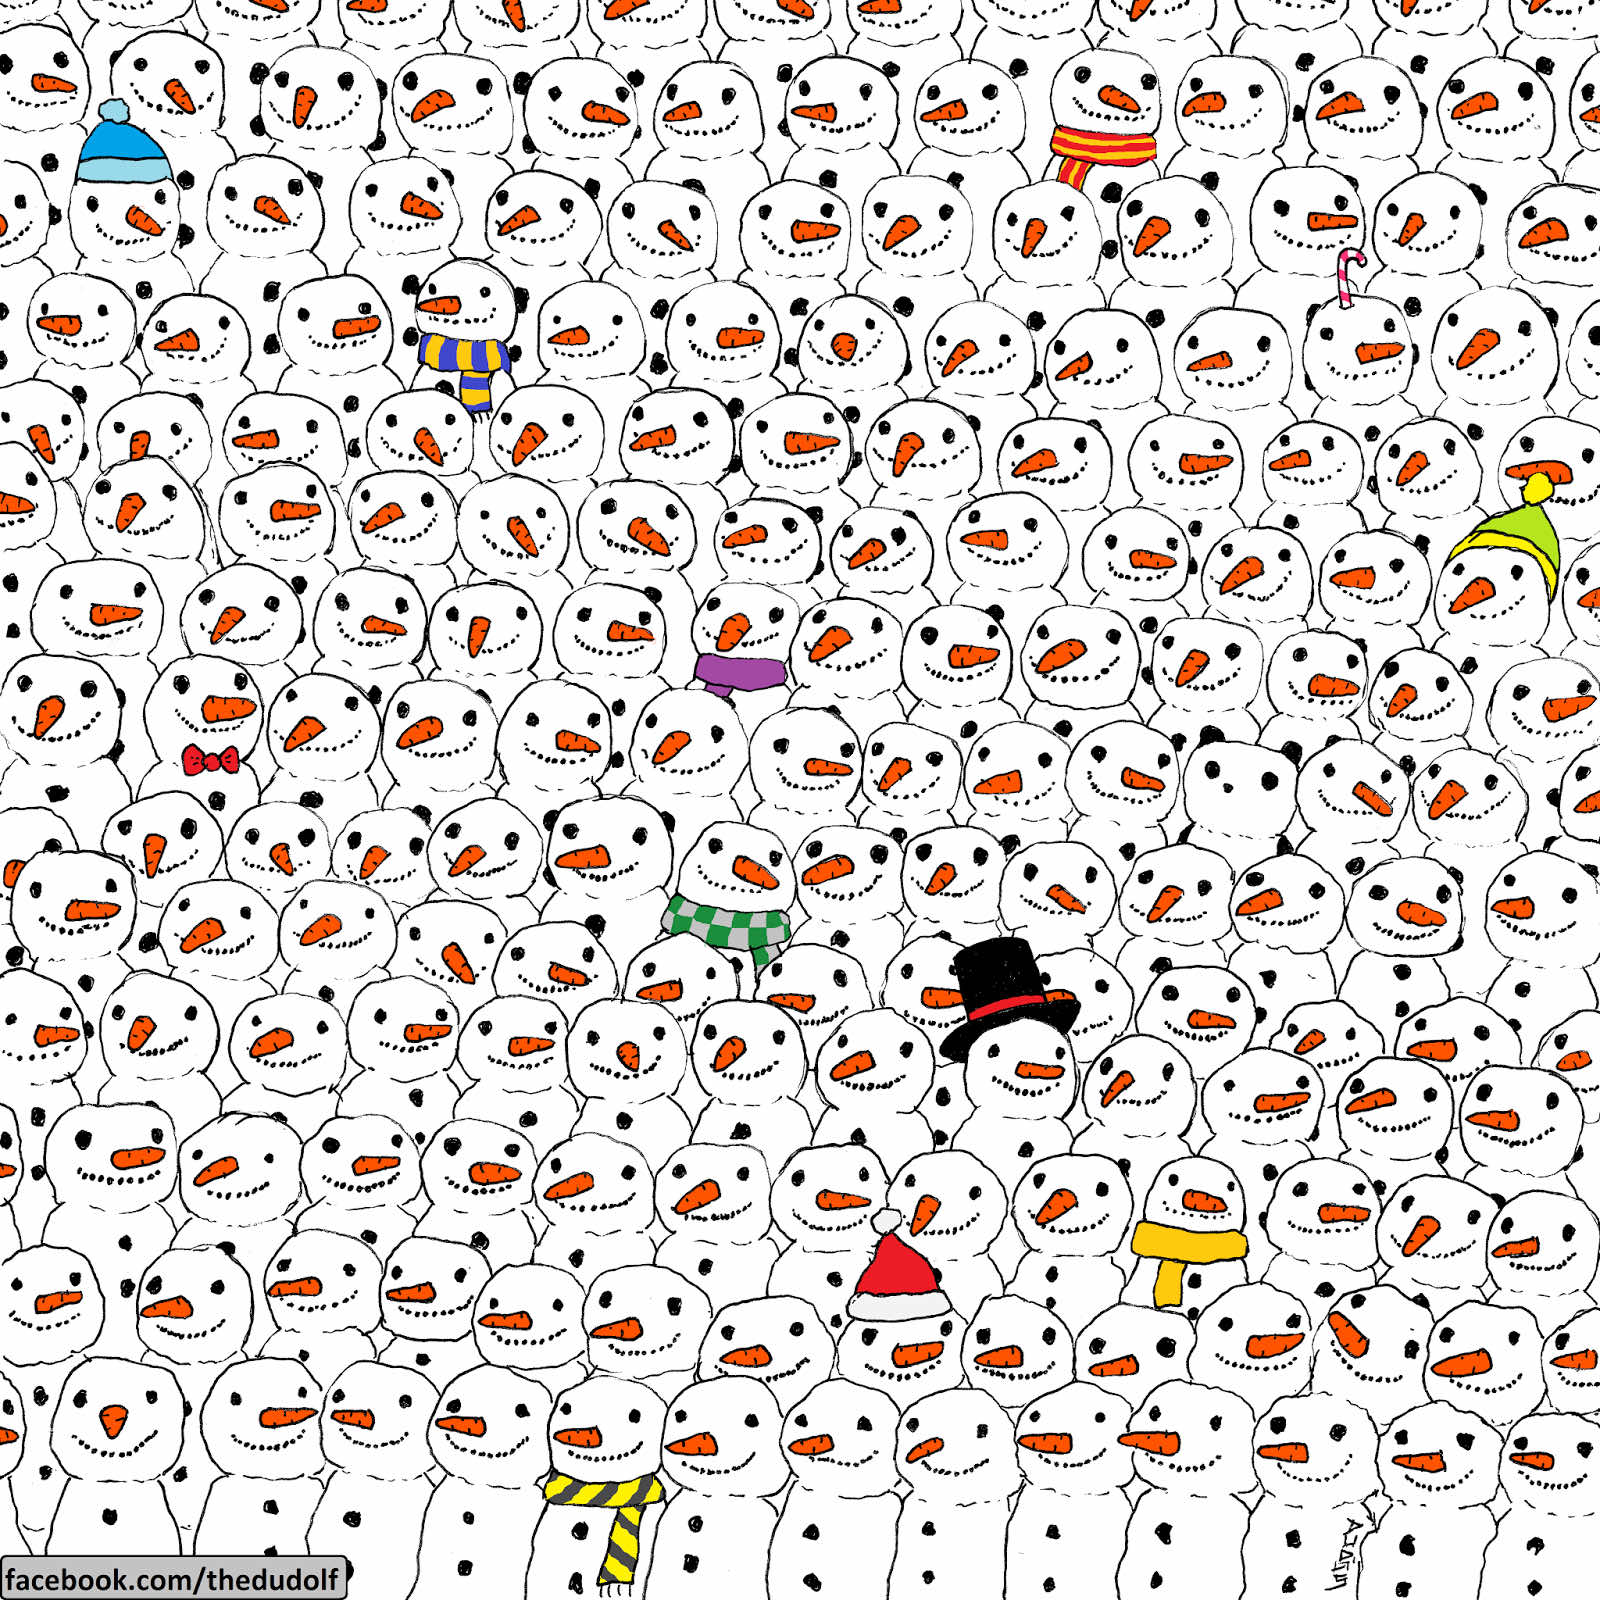 Finding the Panda